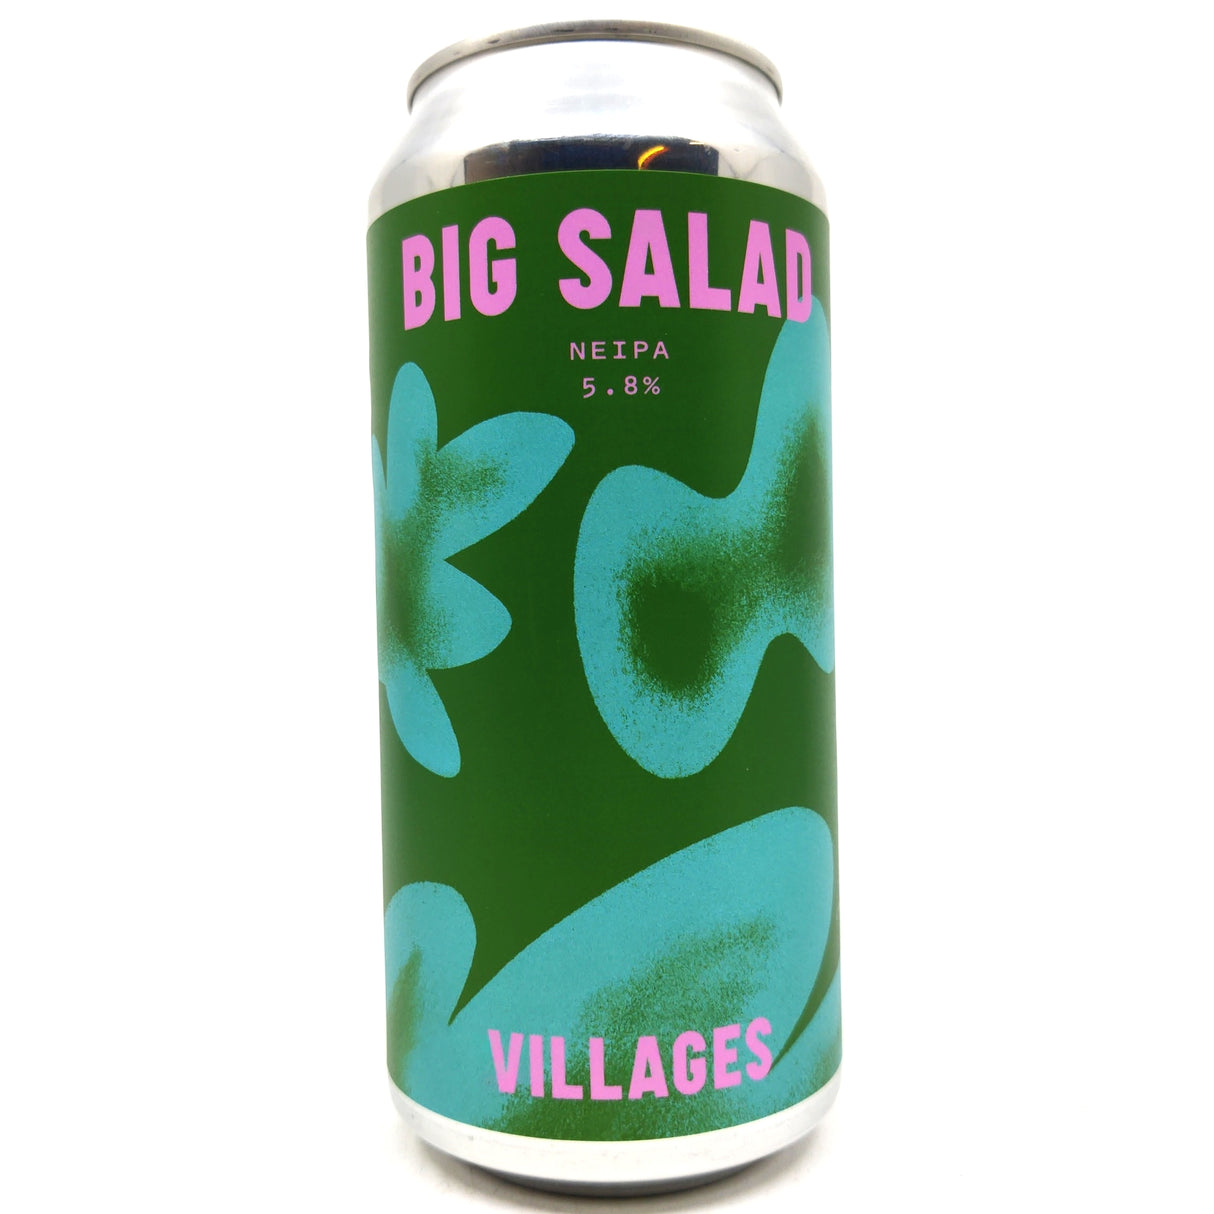 Villages Big Salad New England IPA 5.8% (440ml can)-Hop Burns & Black